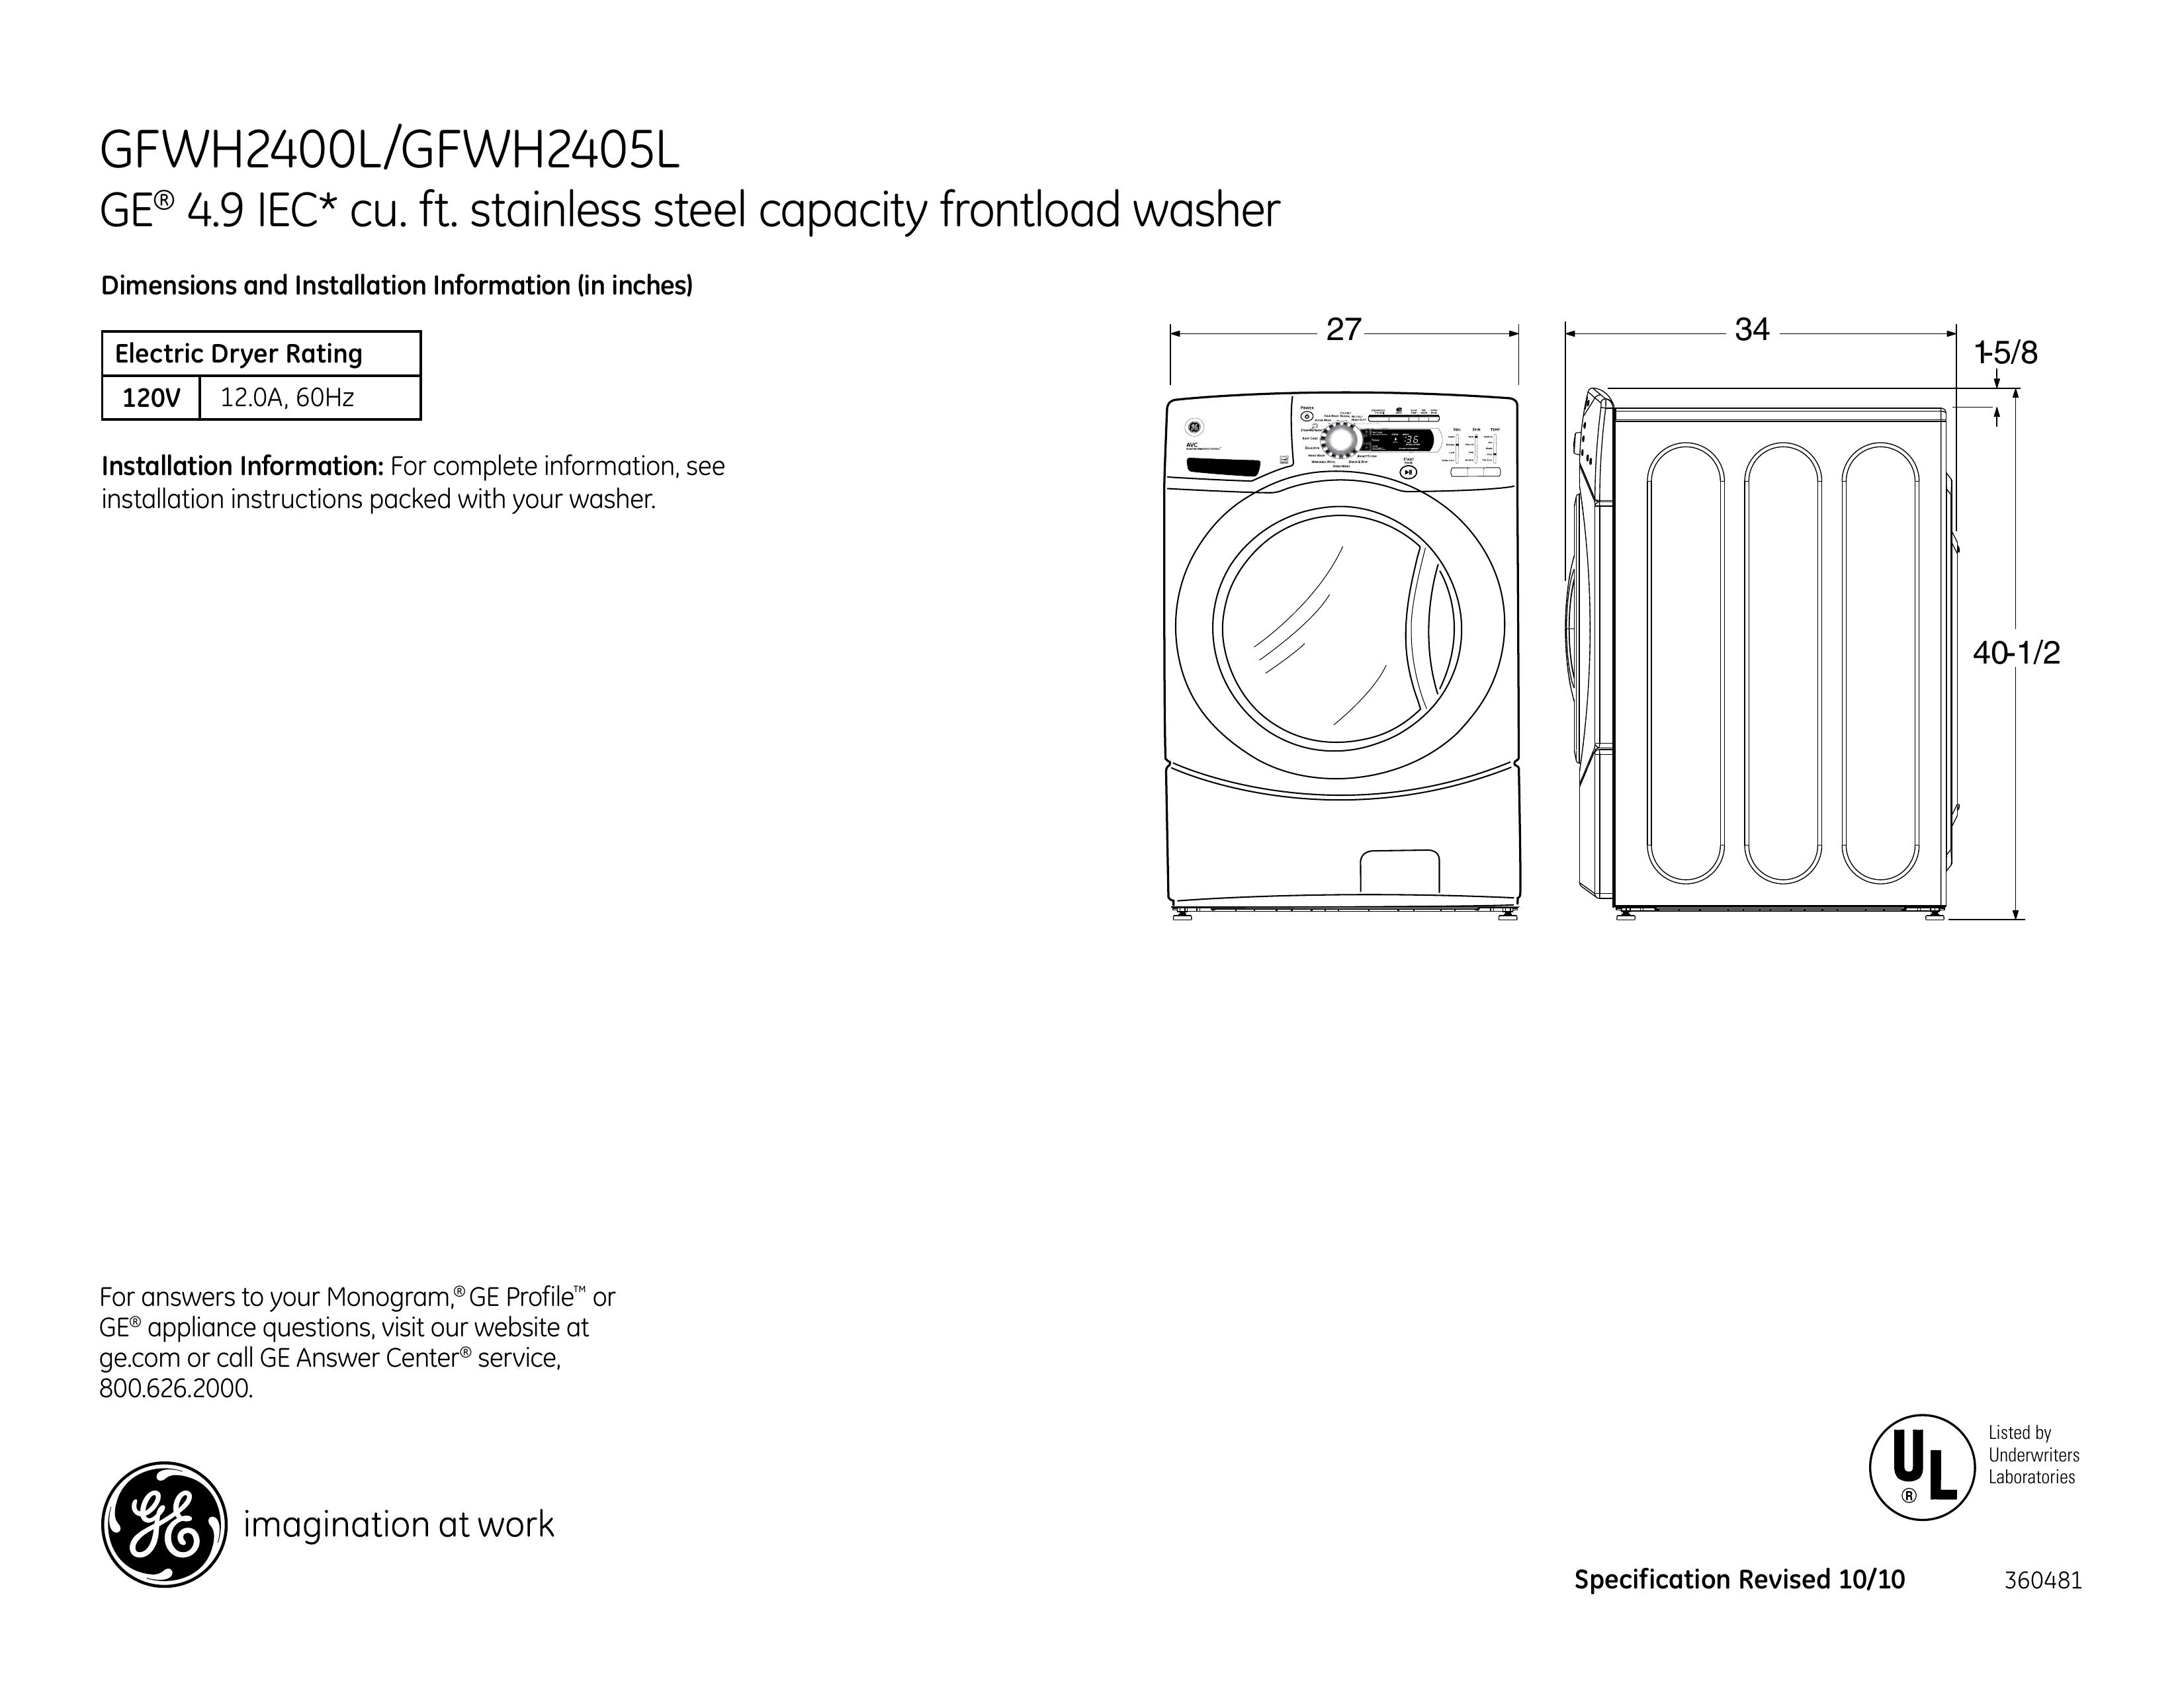 GE GFWH2405LMS Washer User Manual